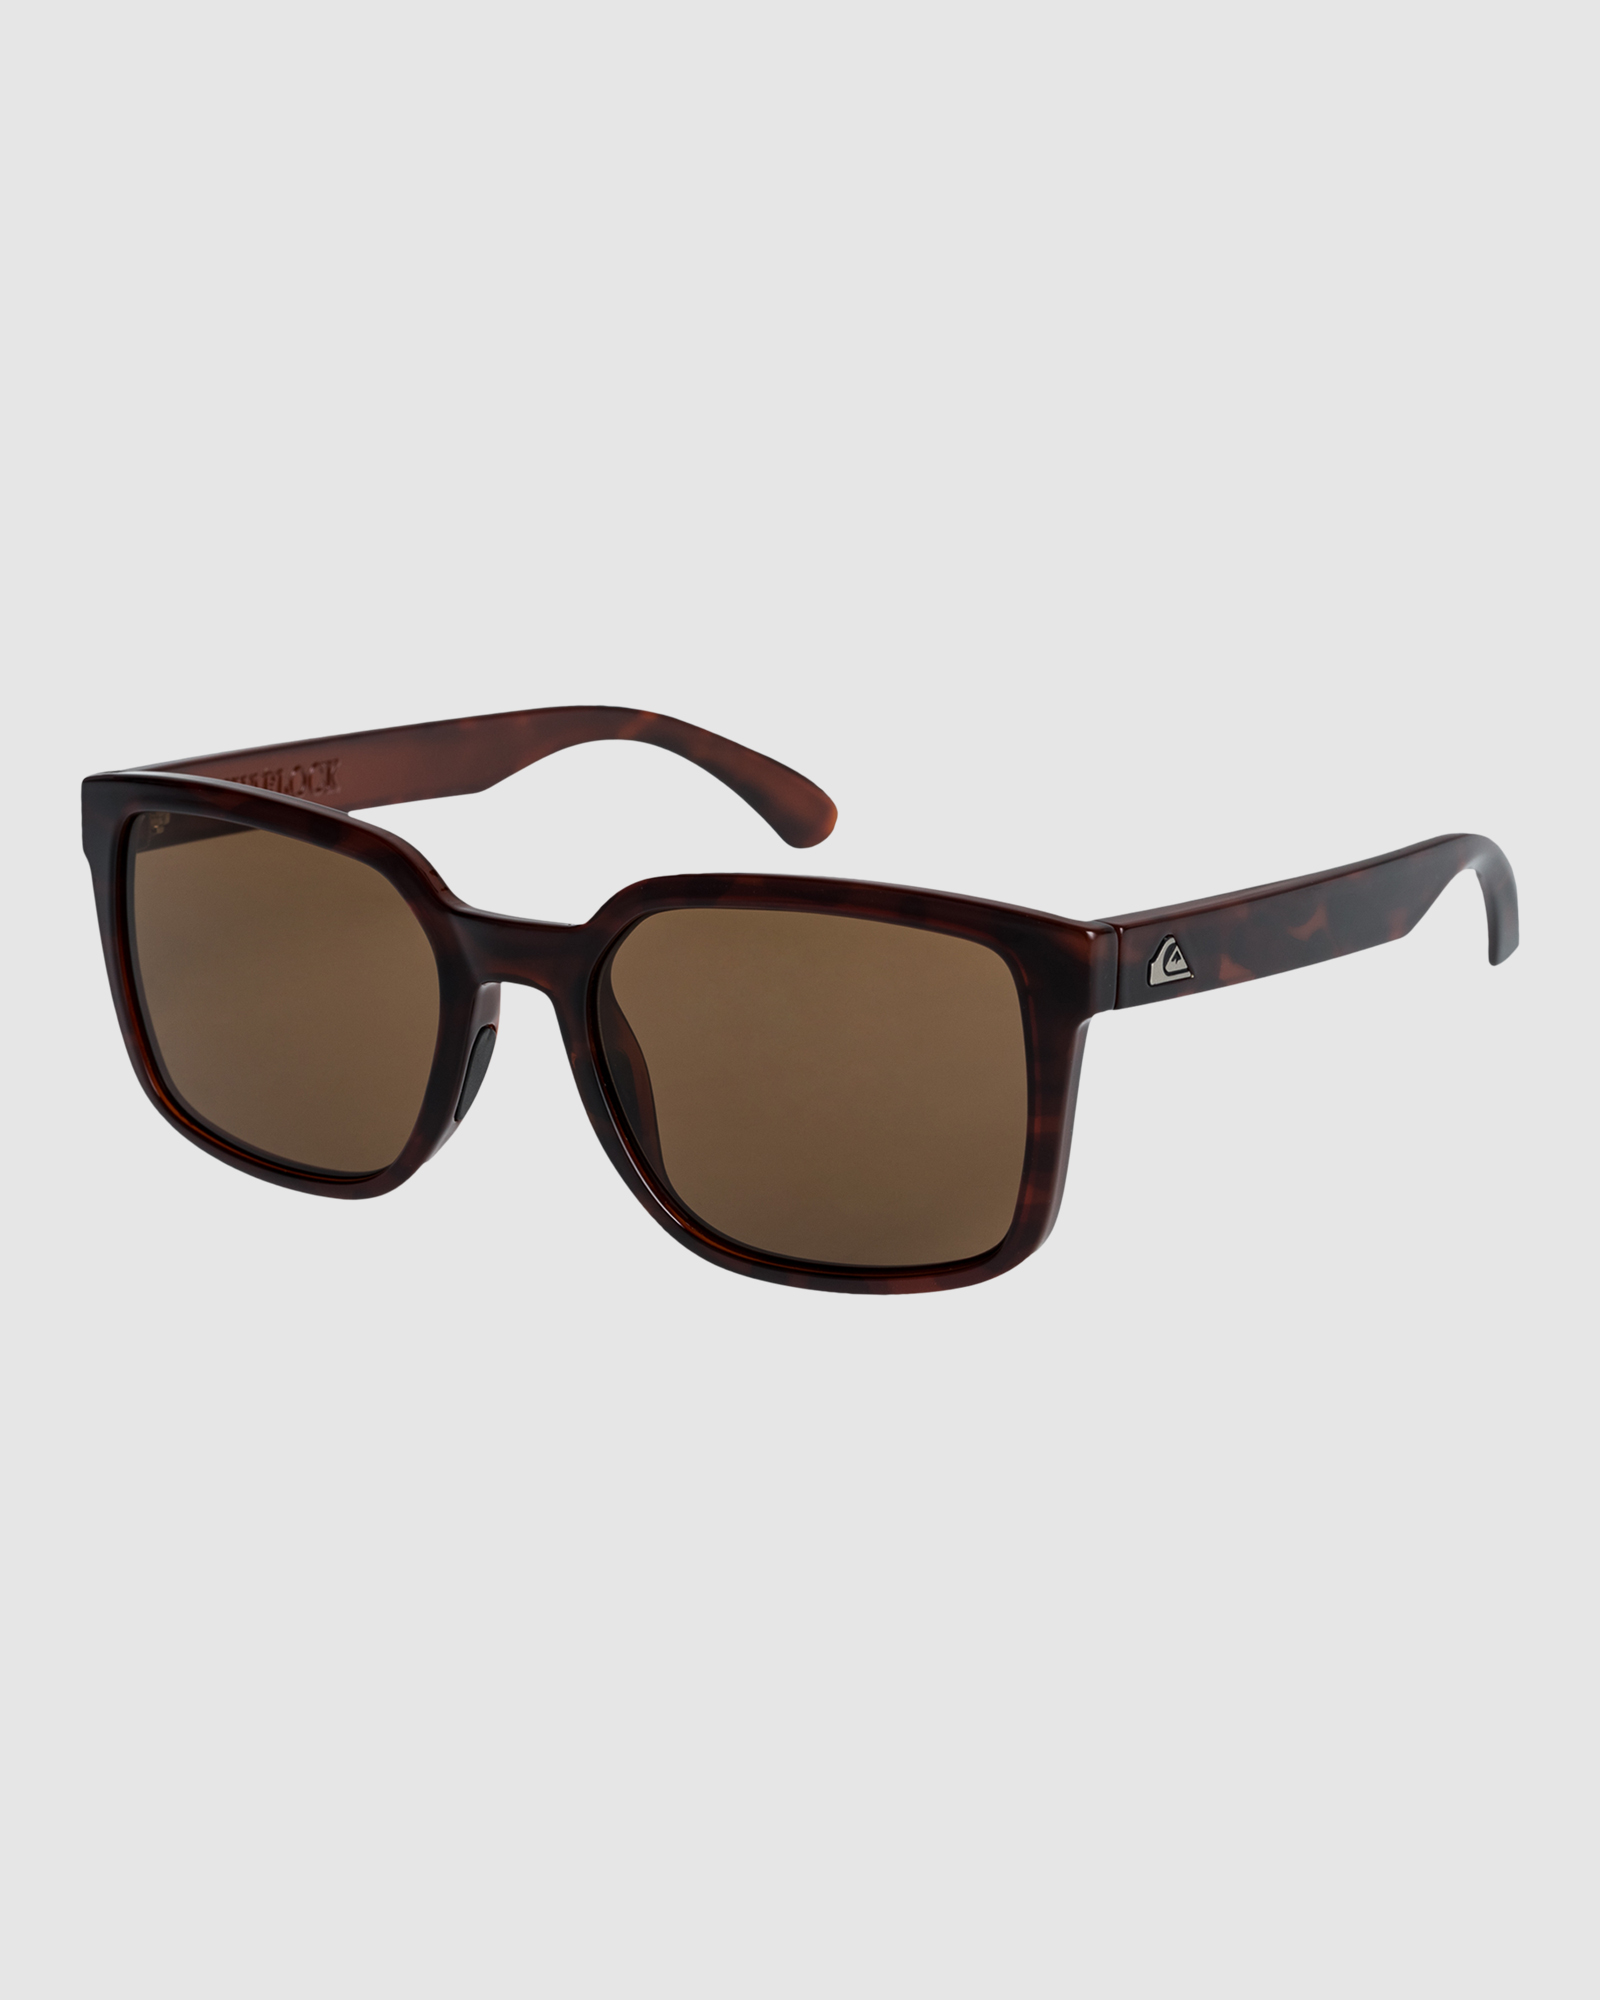 Quiksilver Warlock - Sunglasses For Men - Brown Tortoise Brown